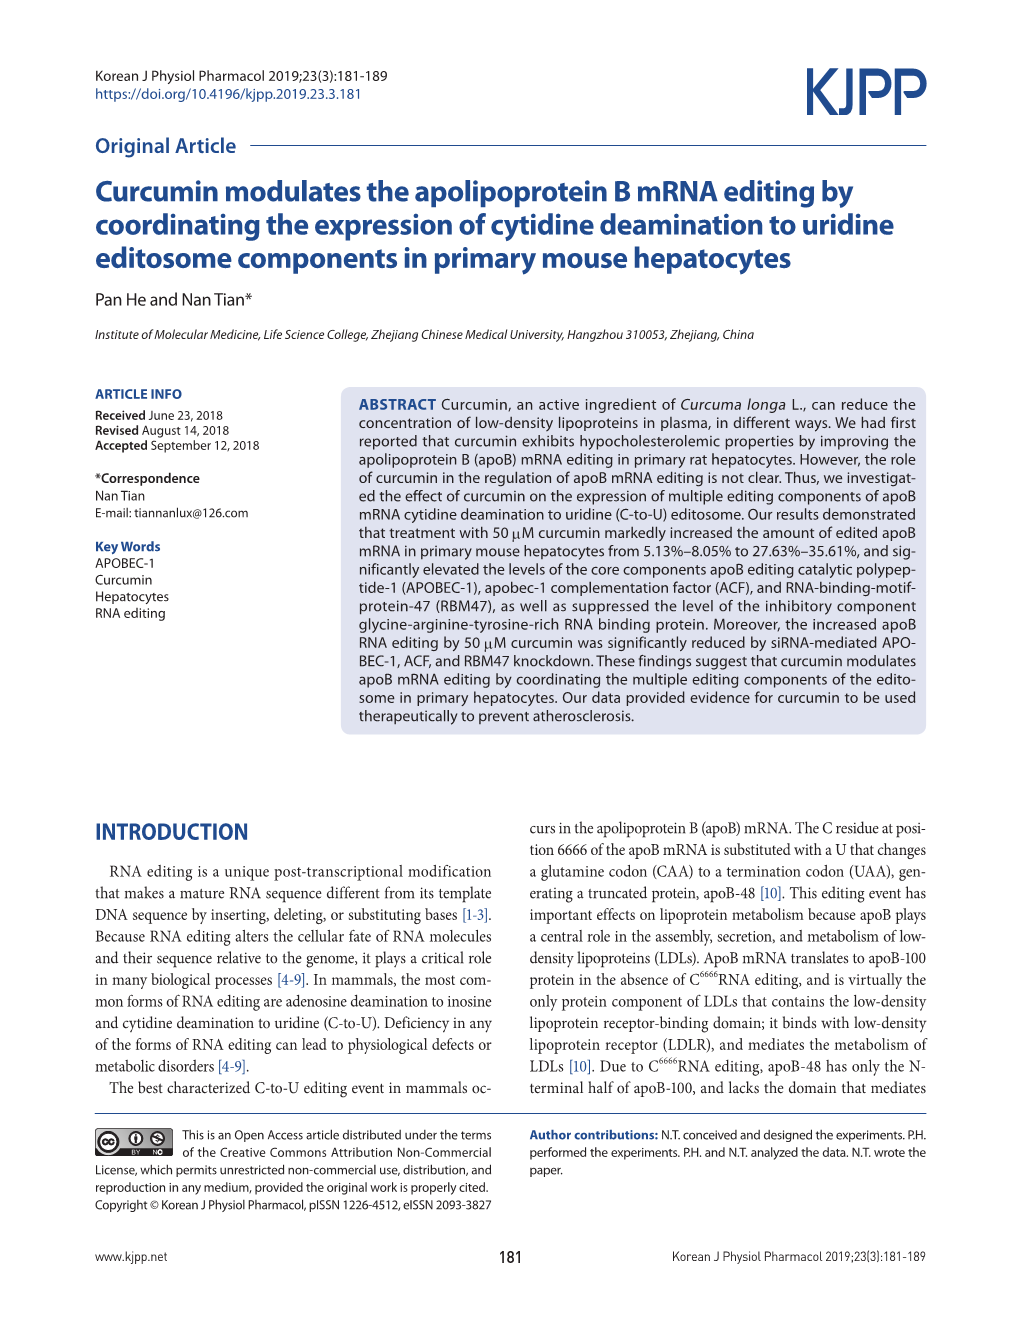 Curcumin Modulates the Apolipoprotein B Mrna Editing By